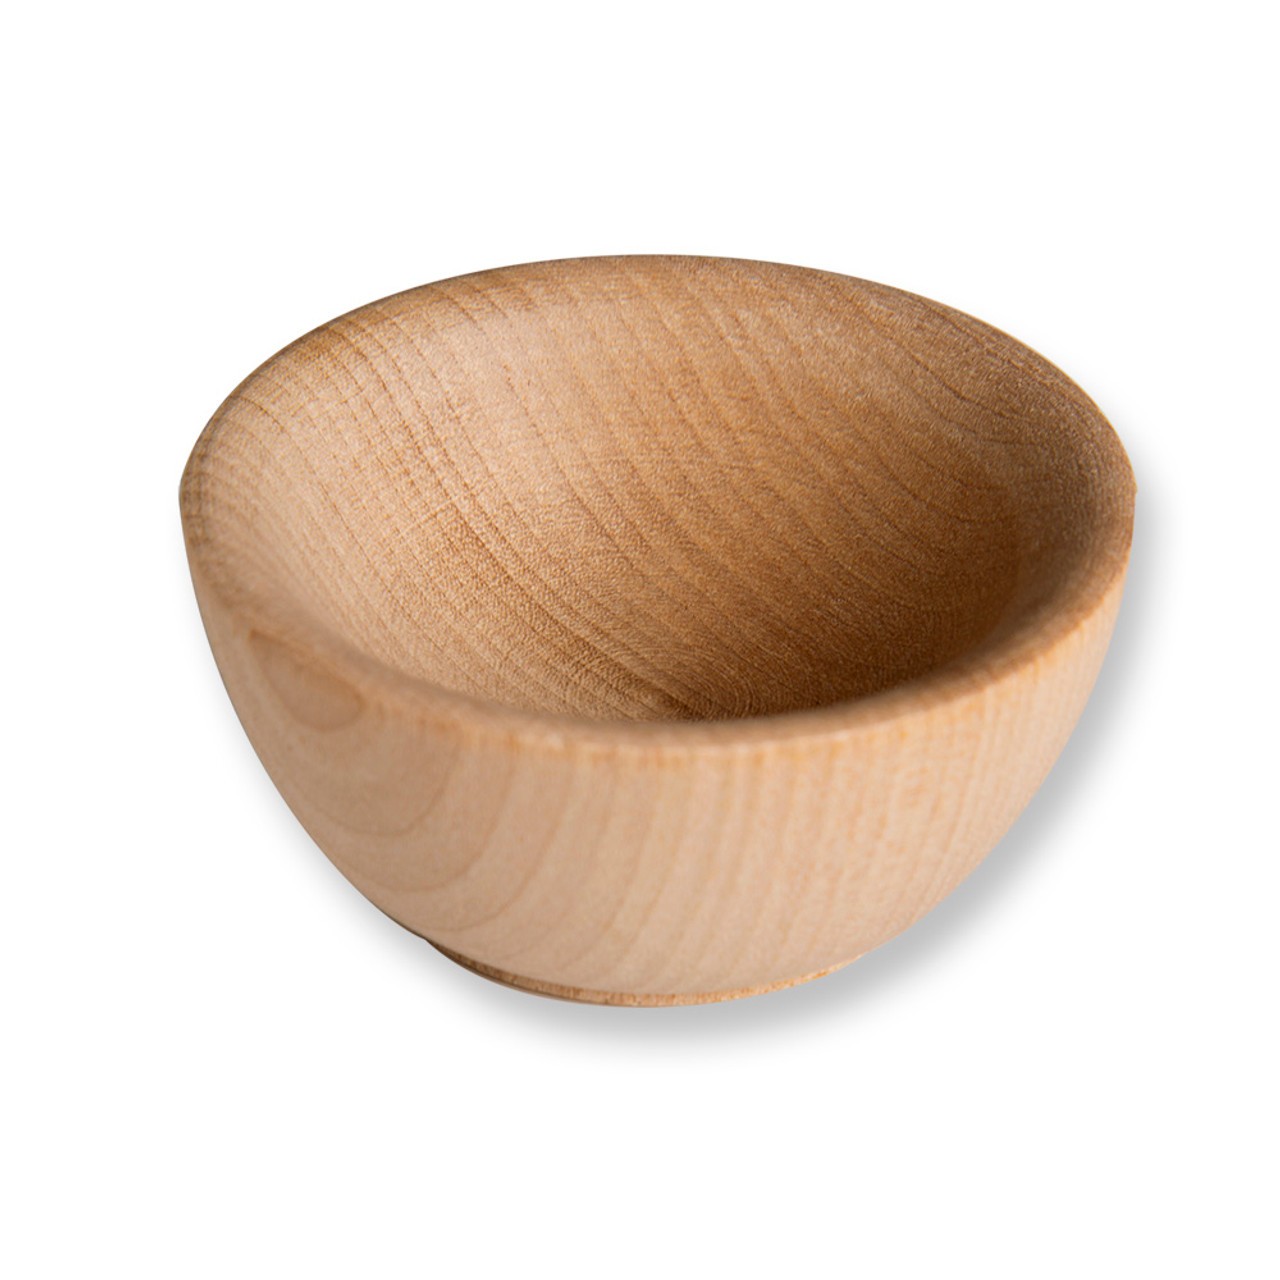 2-1/2 Miniature Wooden Bowl / Condiment Cup